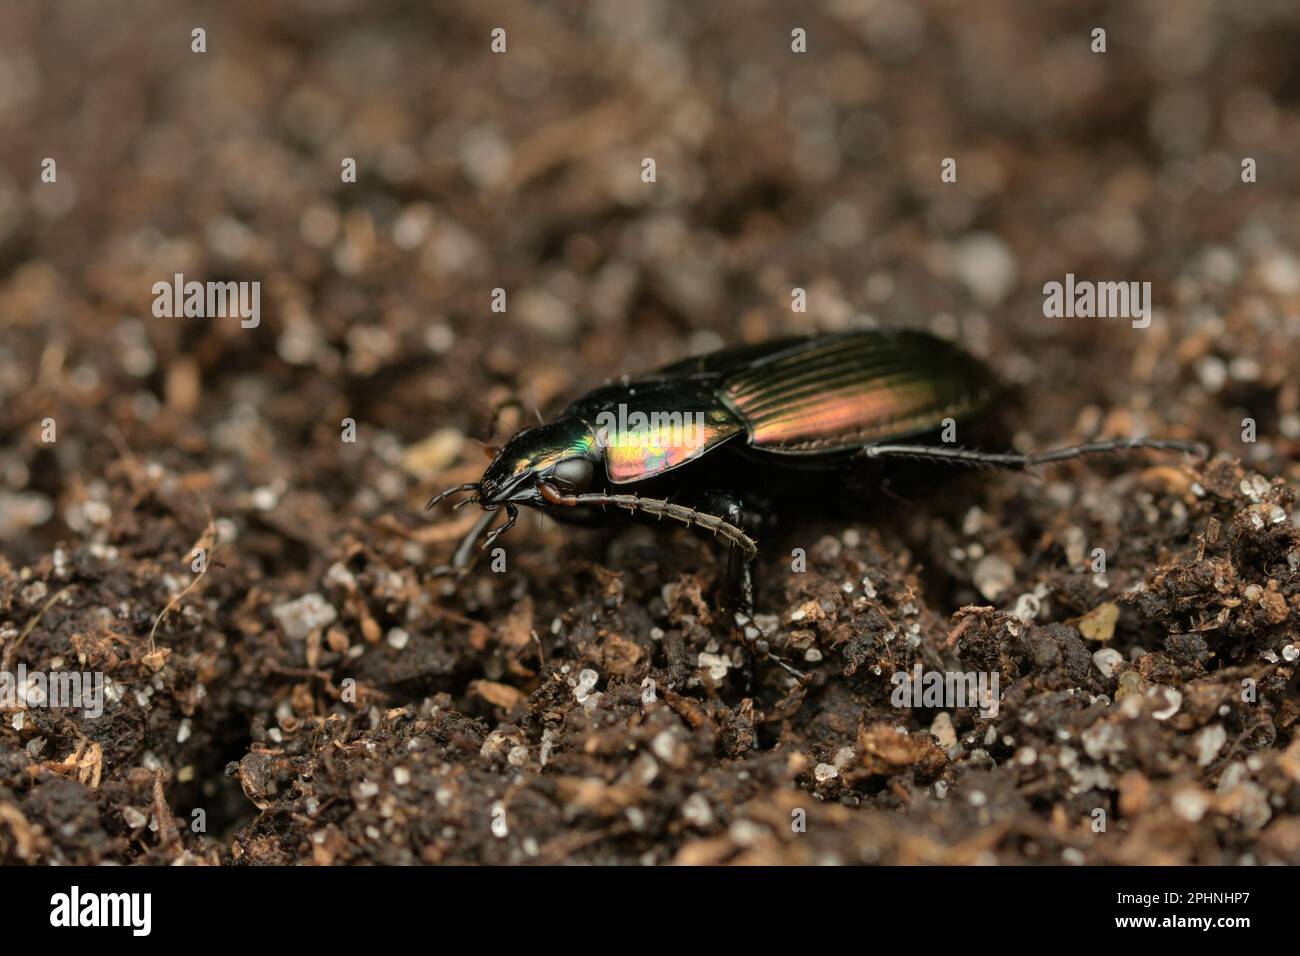 A male groundbeetle (Poecilus versicolor) on soil, shiny, metallic, macro photography, insects Stock Photo